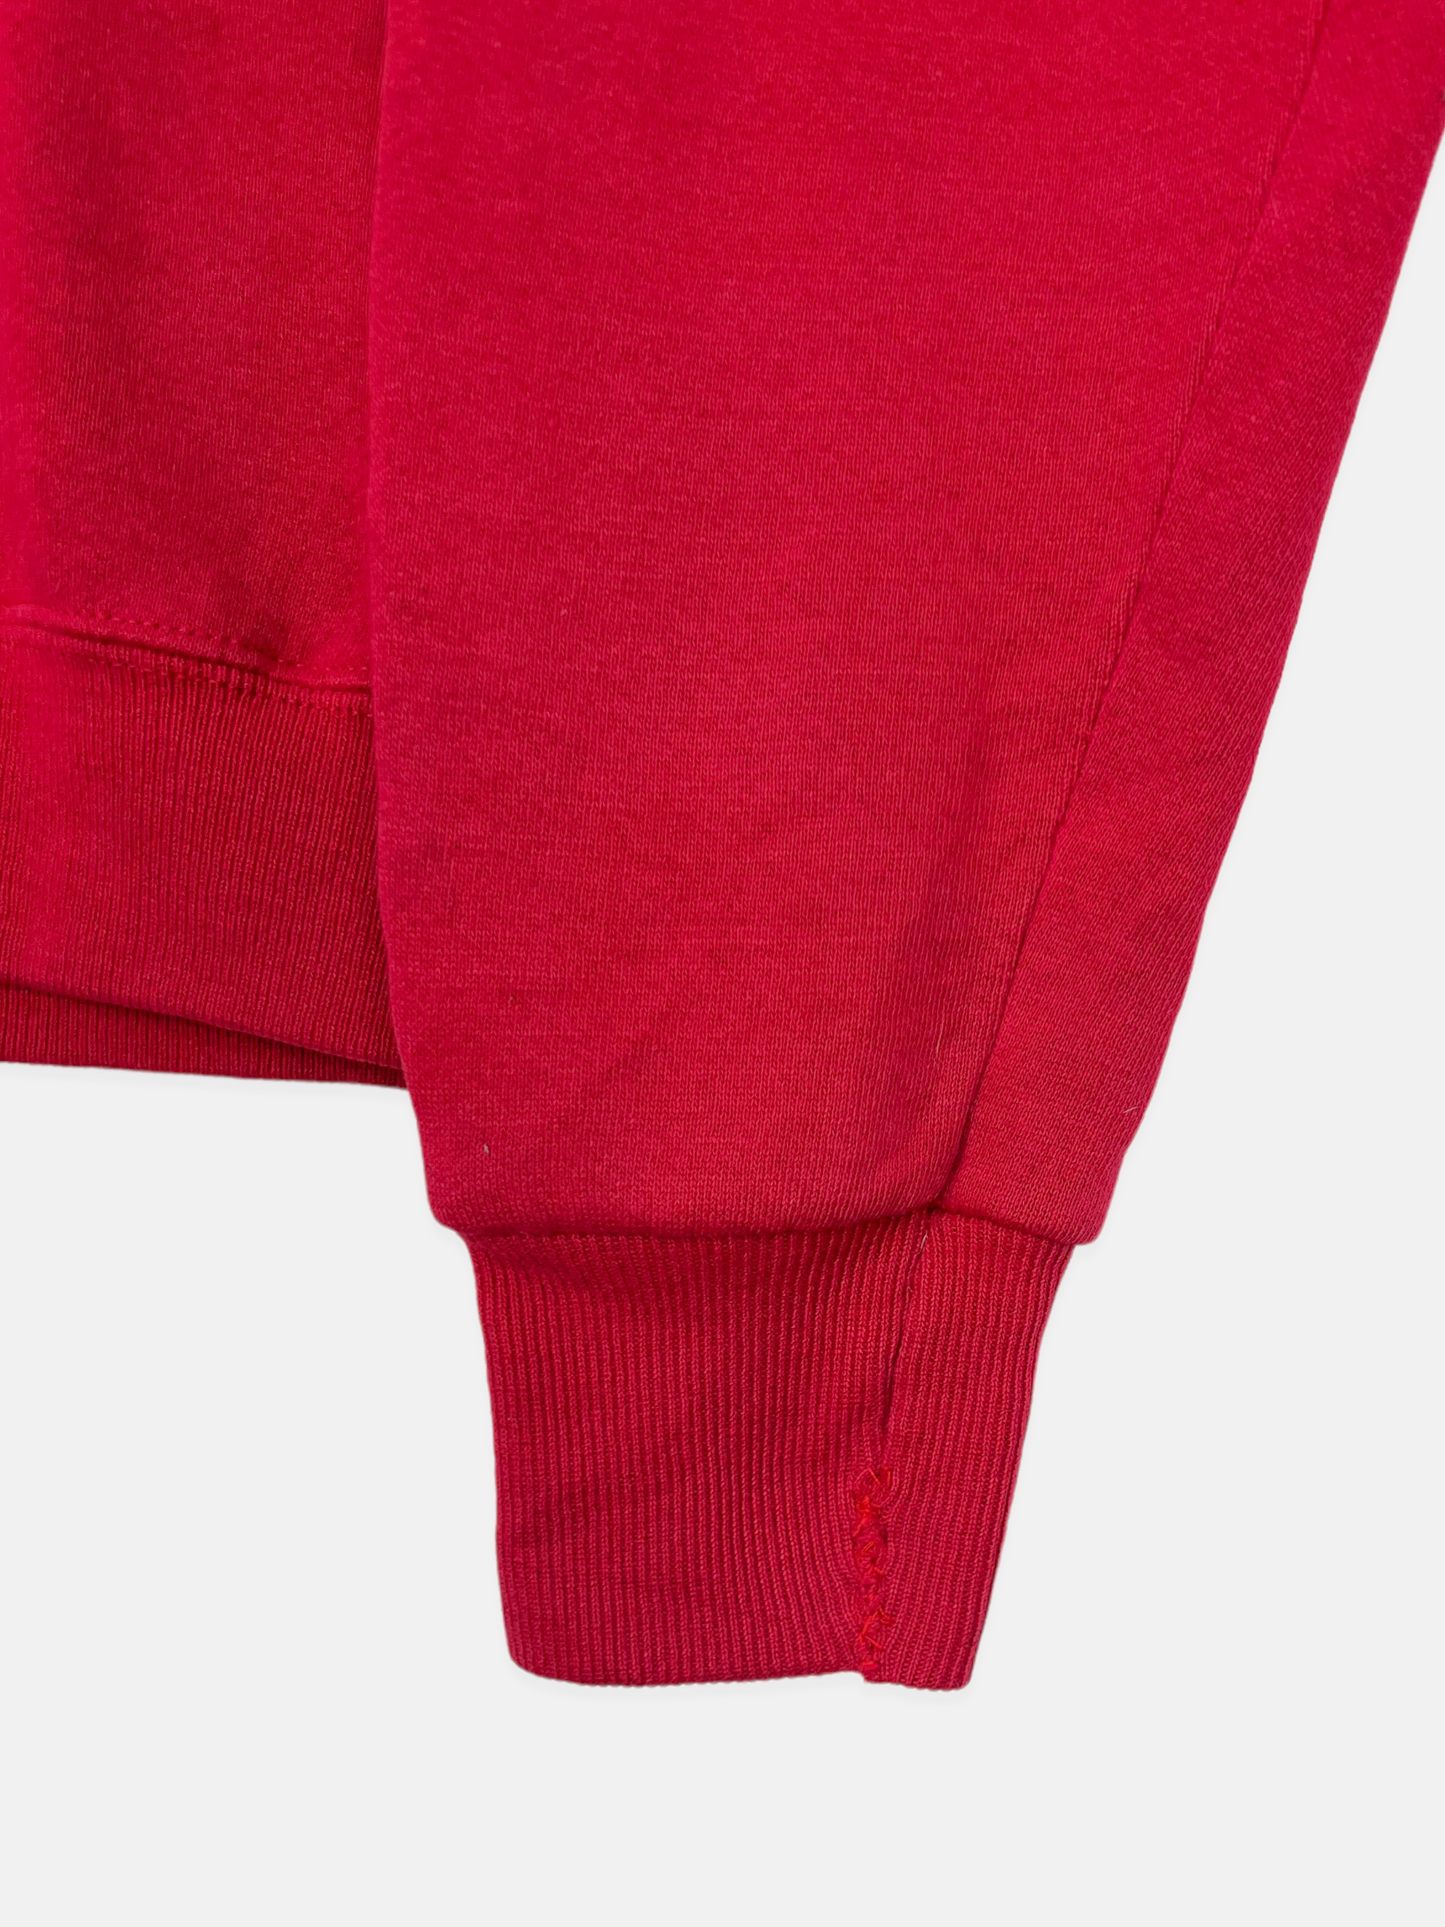 90's San Francisco 49ers NFL USA Made Vintage Sweatshirt Size 10